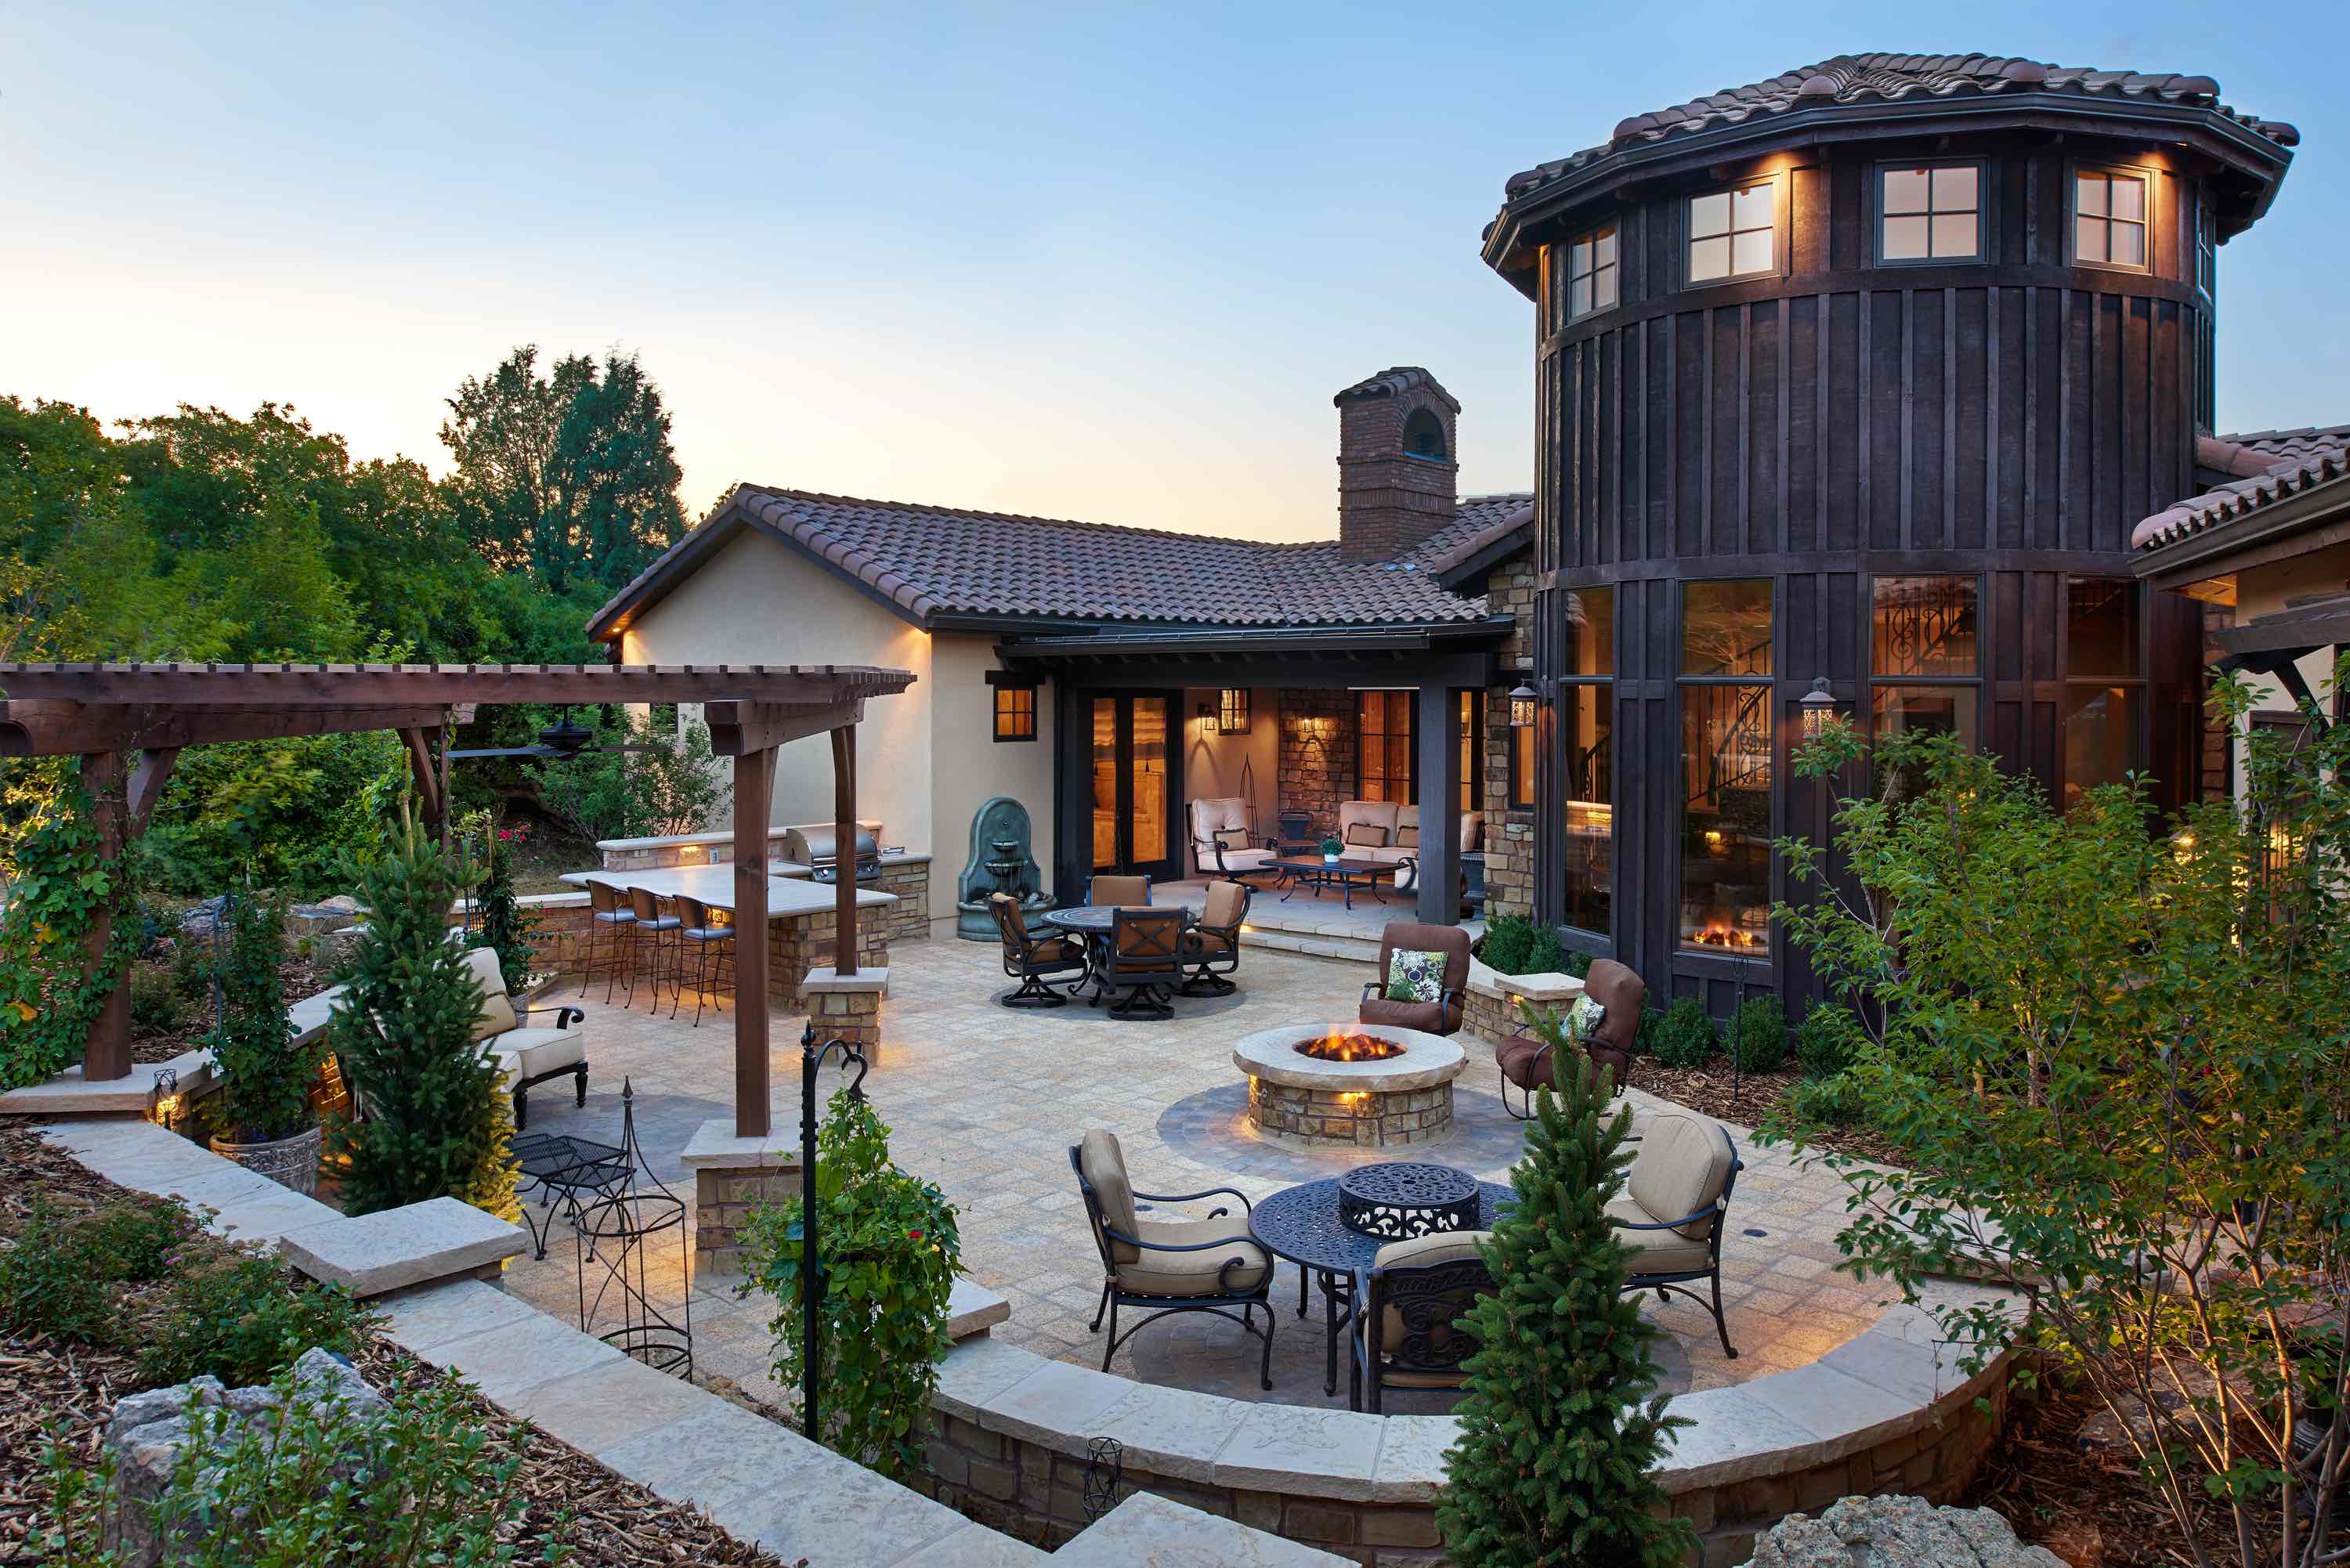 Denver patio design - paver patio with outdoor kitchen and pergola